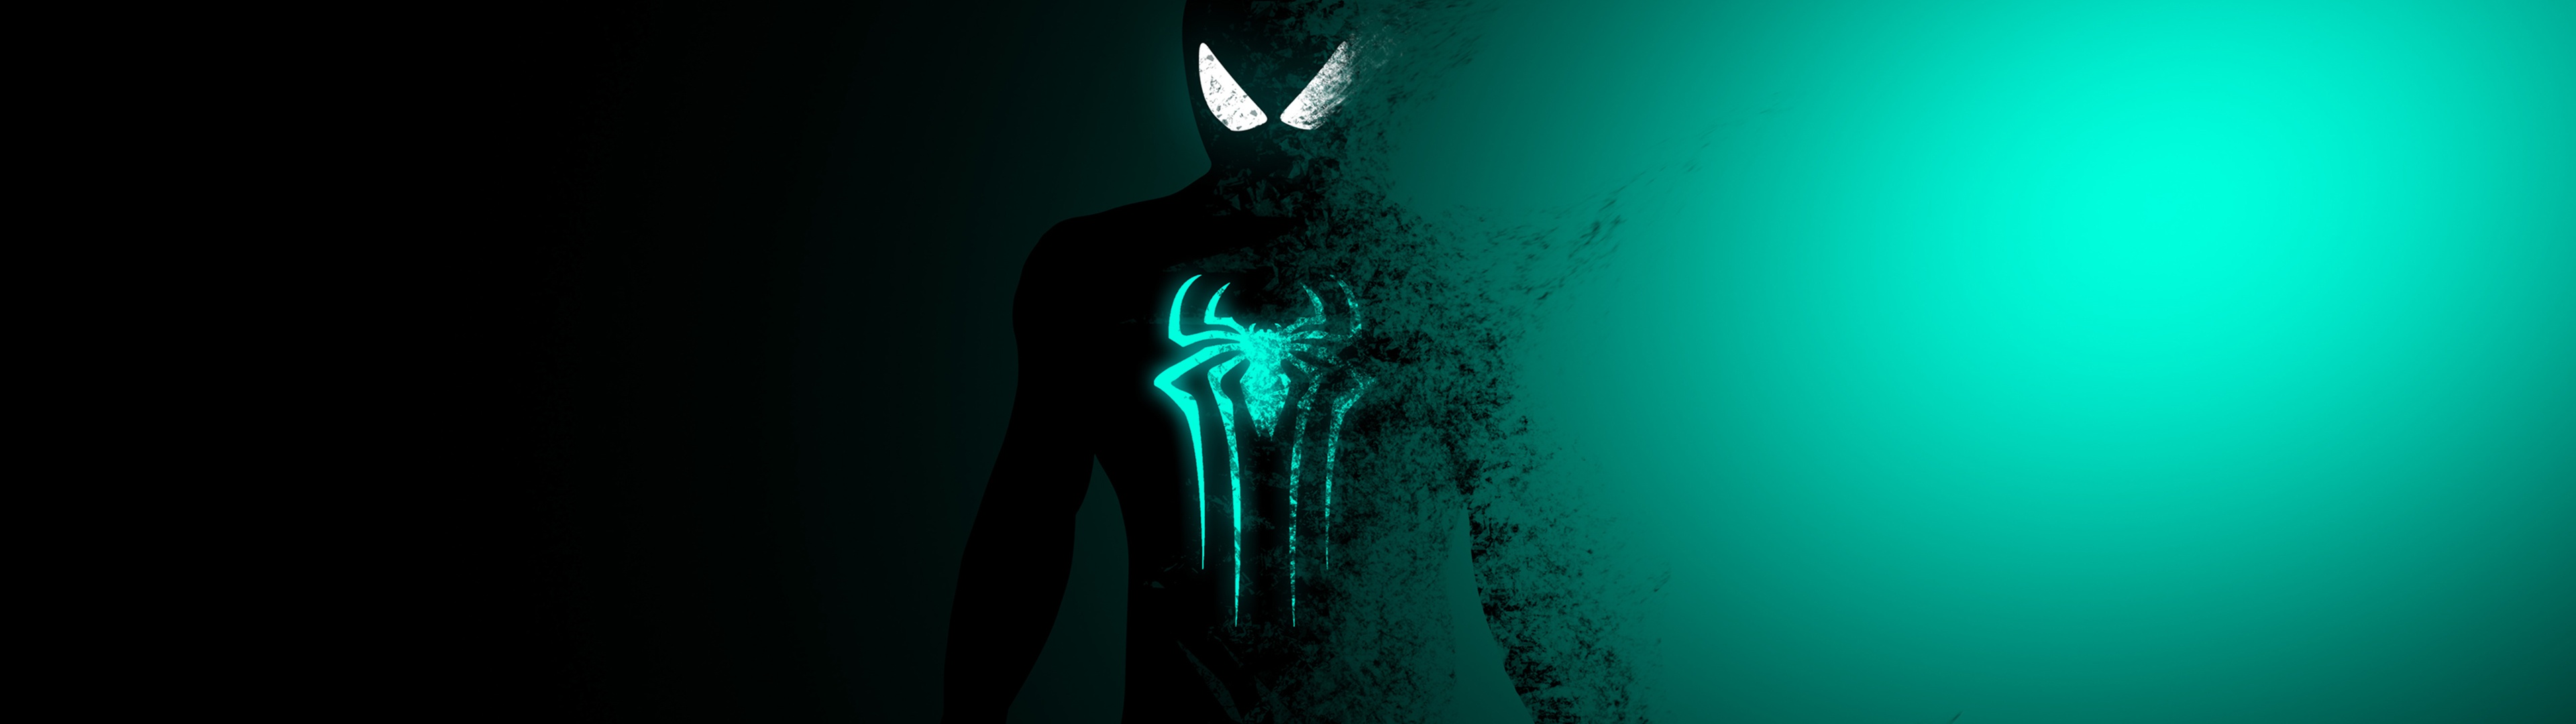 Spider Man Wallpaper 4K, Dark, Cyan, Minimal, Marvel Superheroes, Graphics CGI